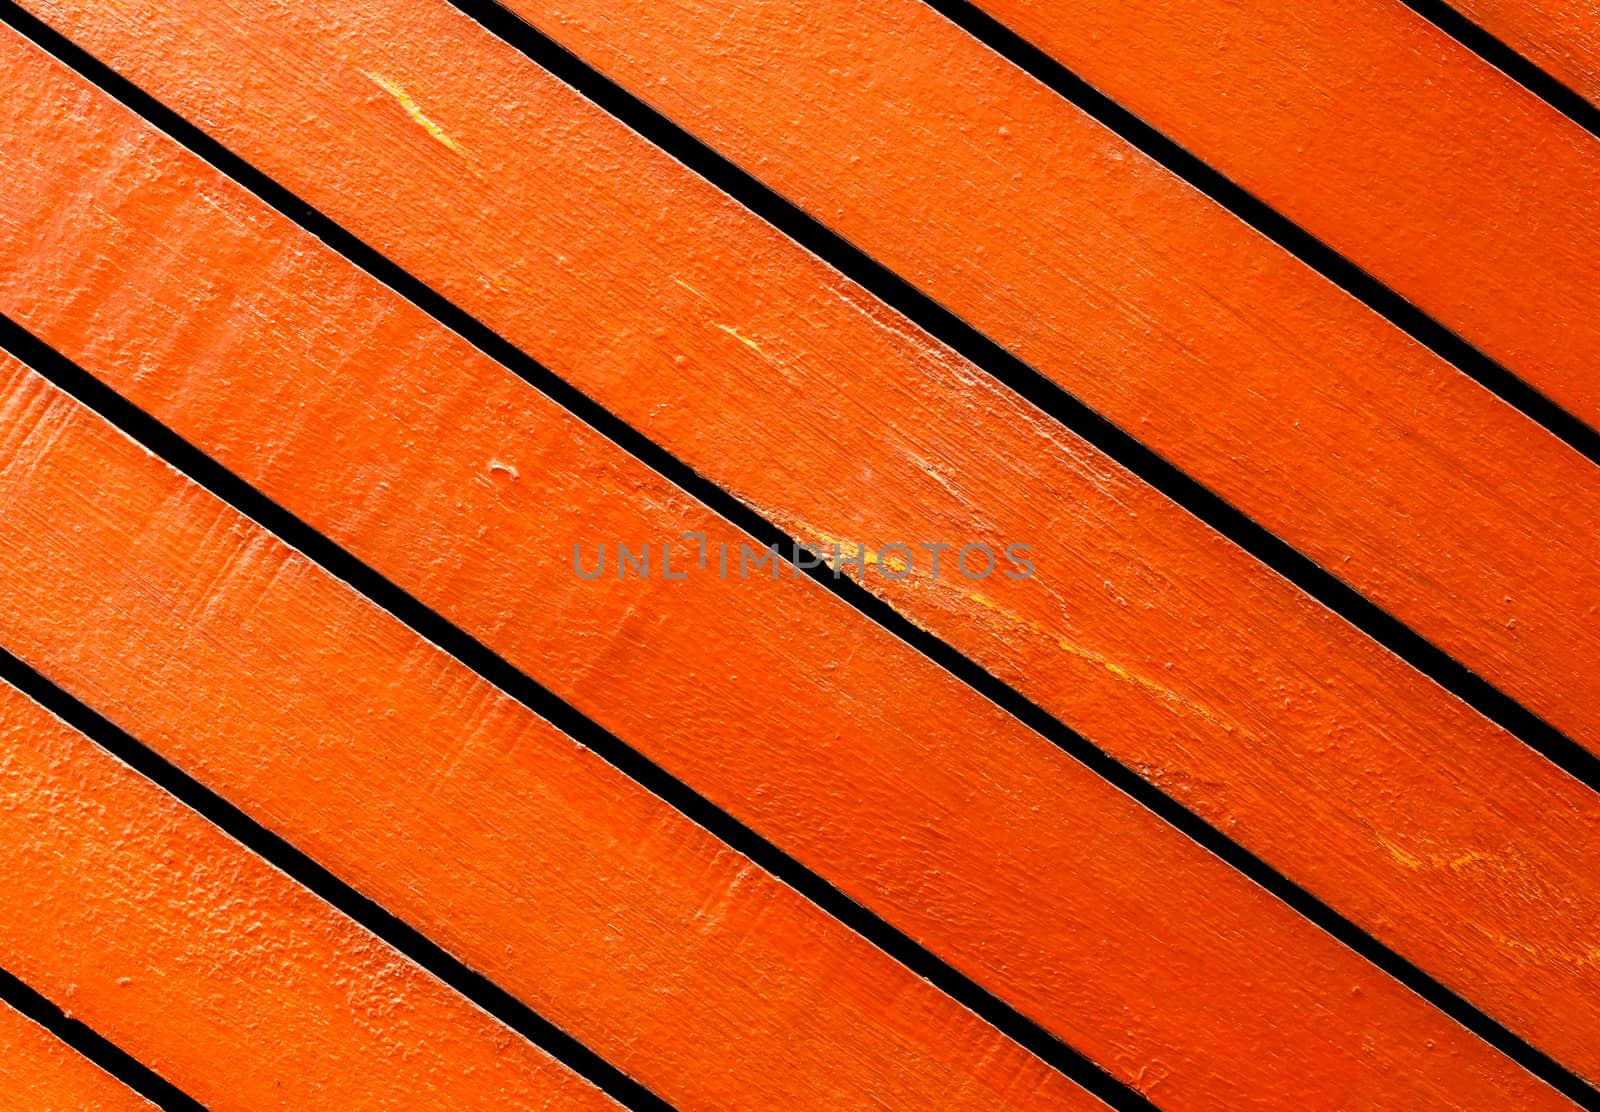 Beautiful orange wood wall surfaces.